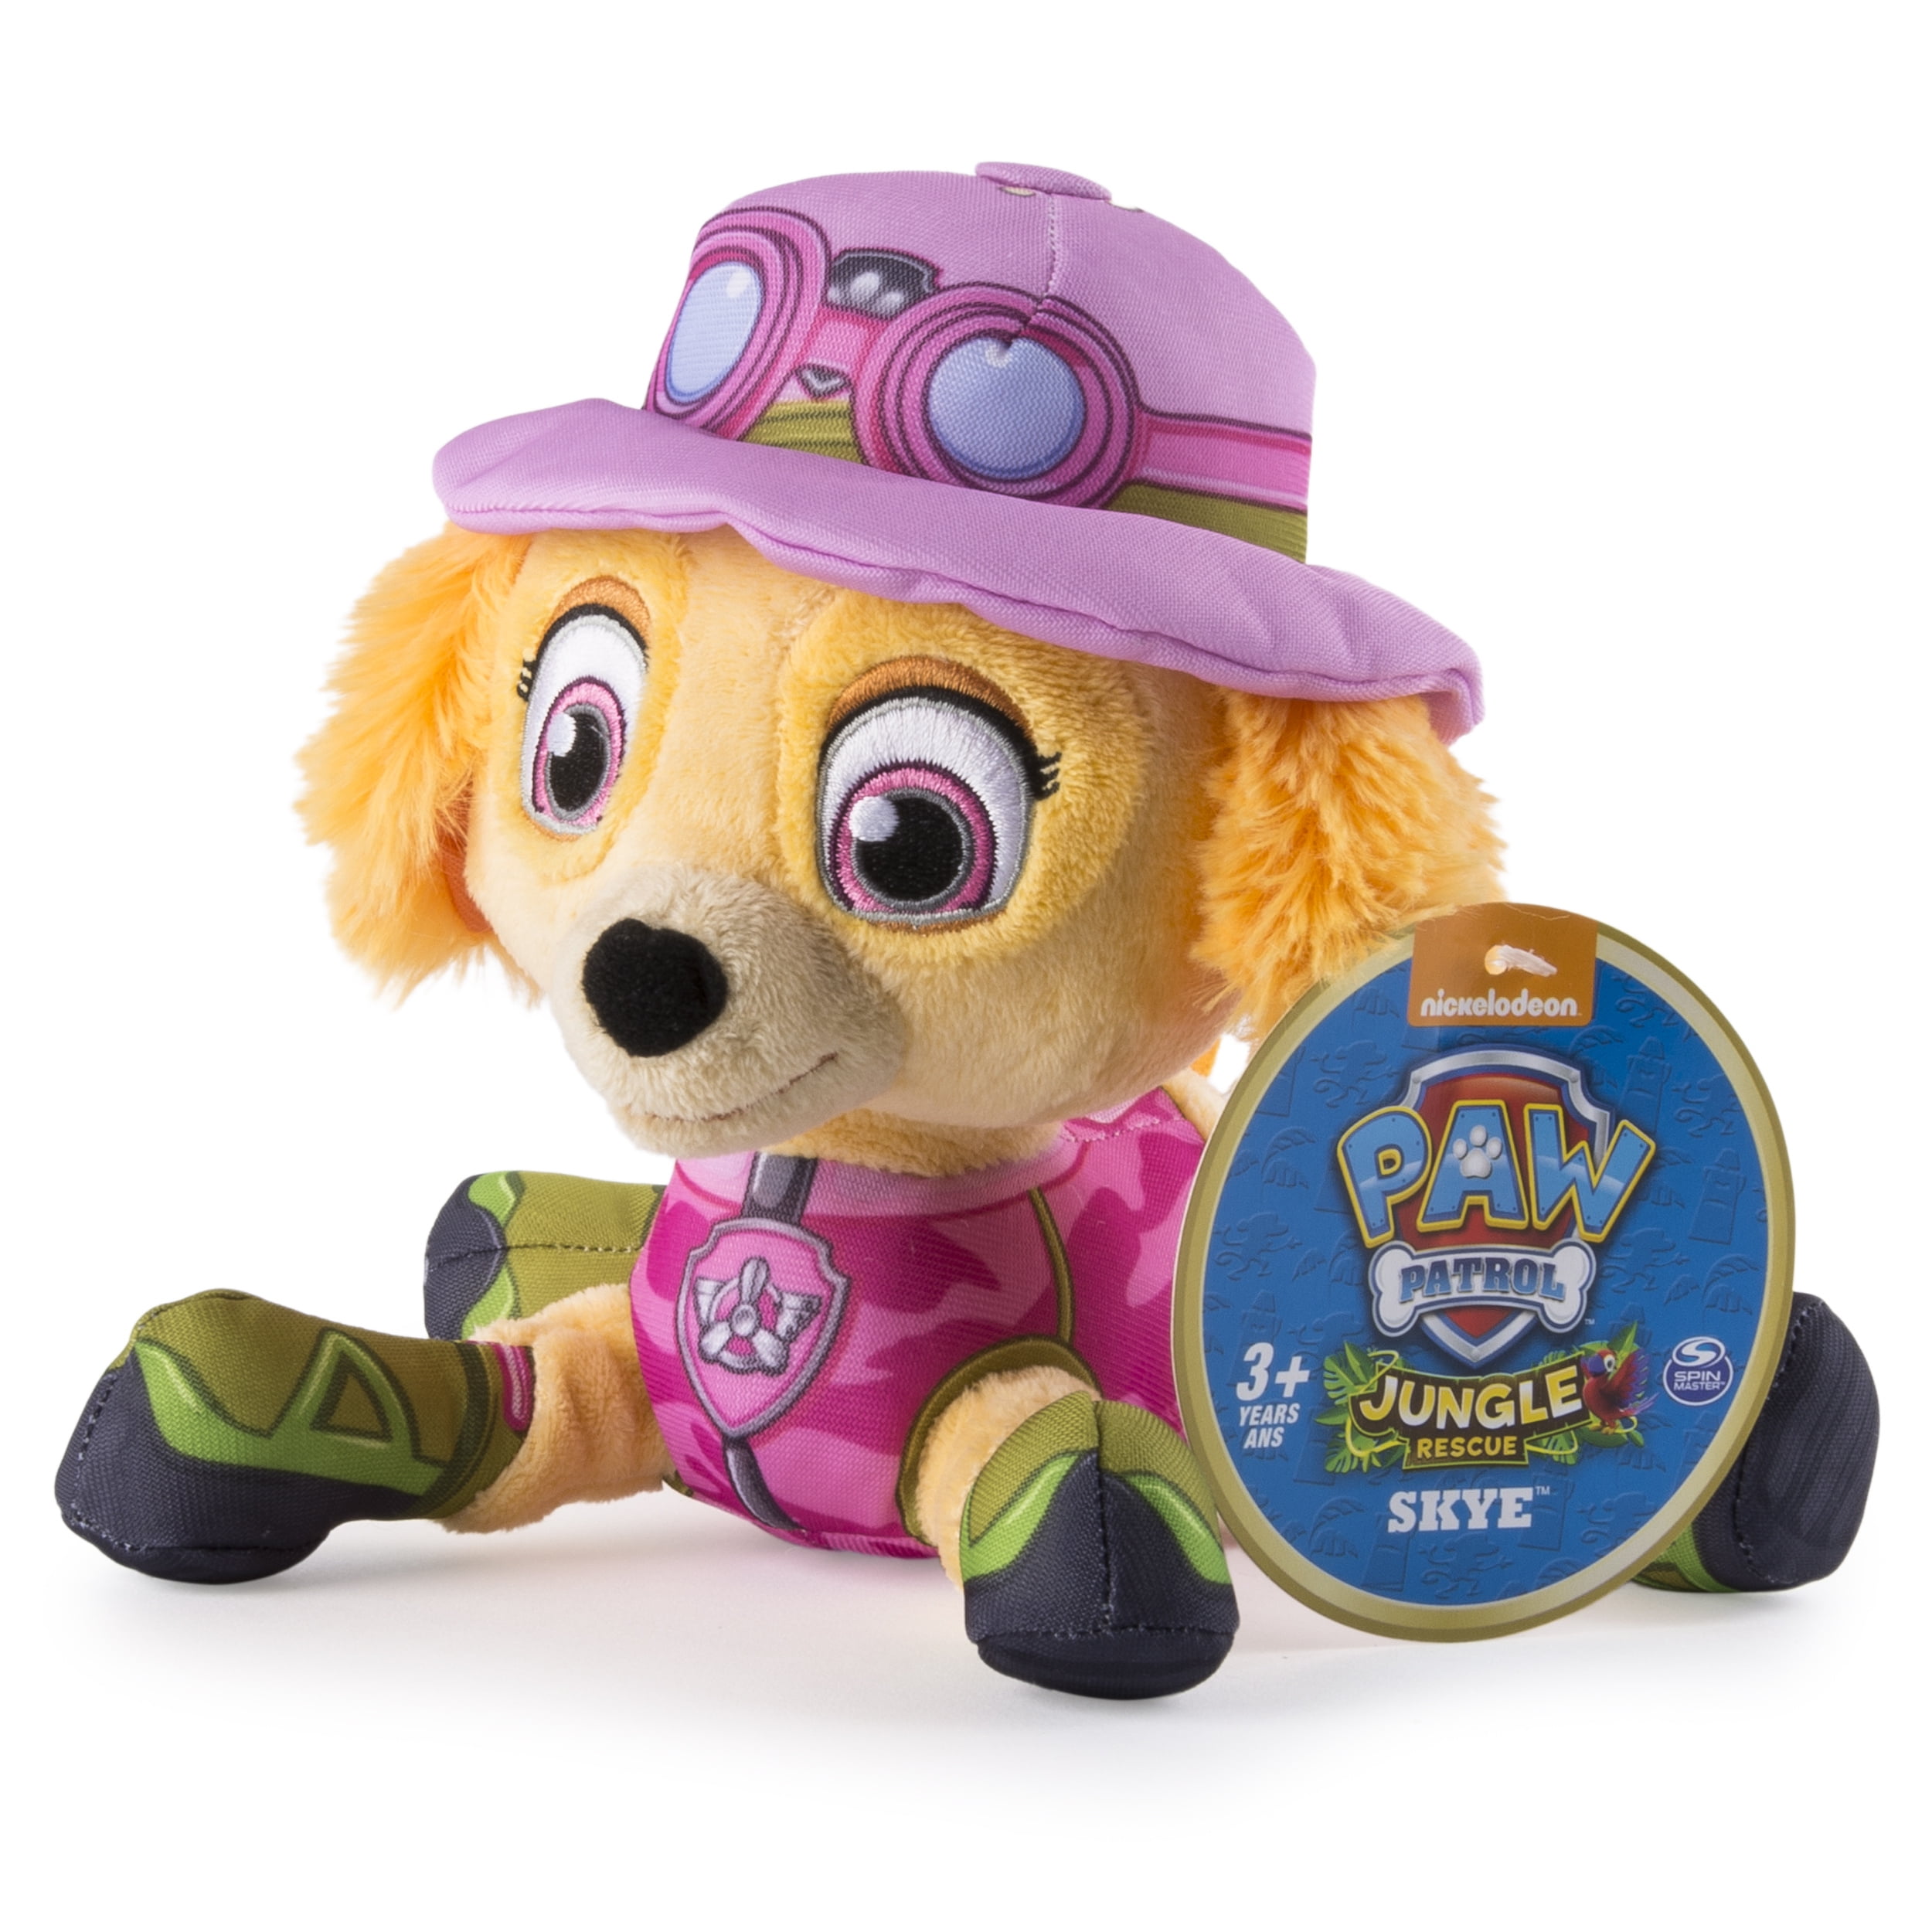 Paw Patrol Jungle Rescue 'Skye' 27cm Plush Soft Toy Brand New Gift 